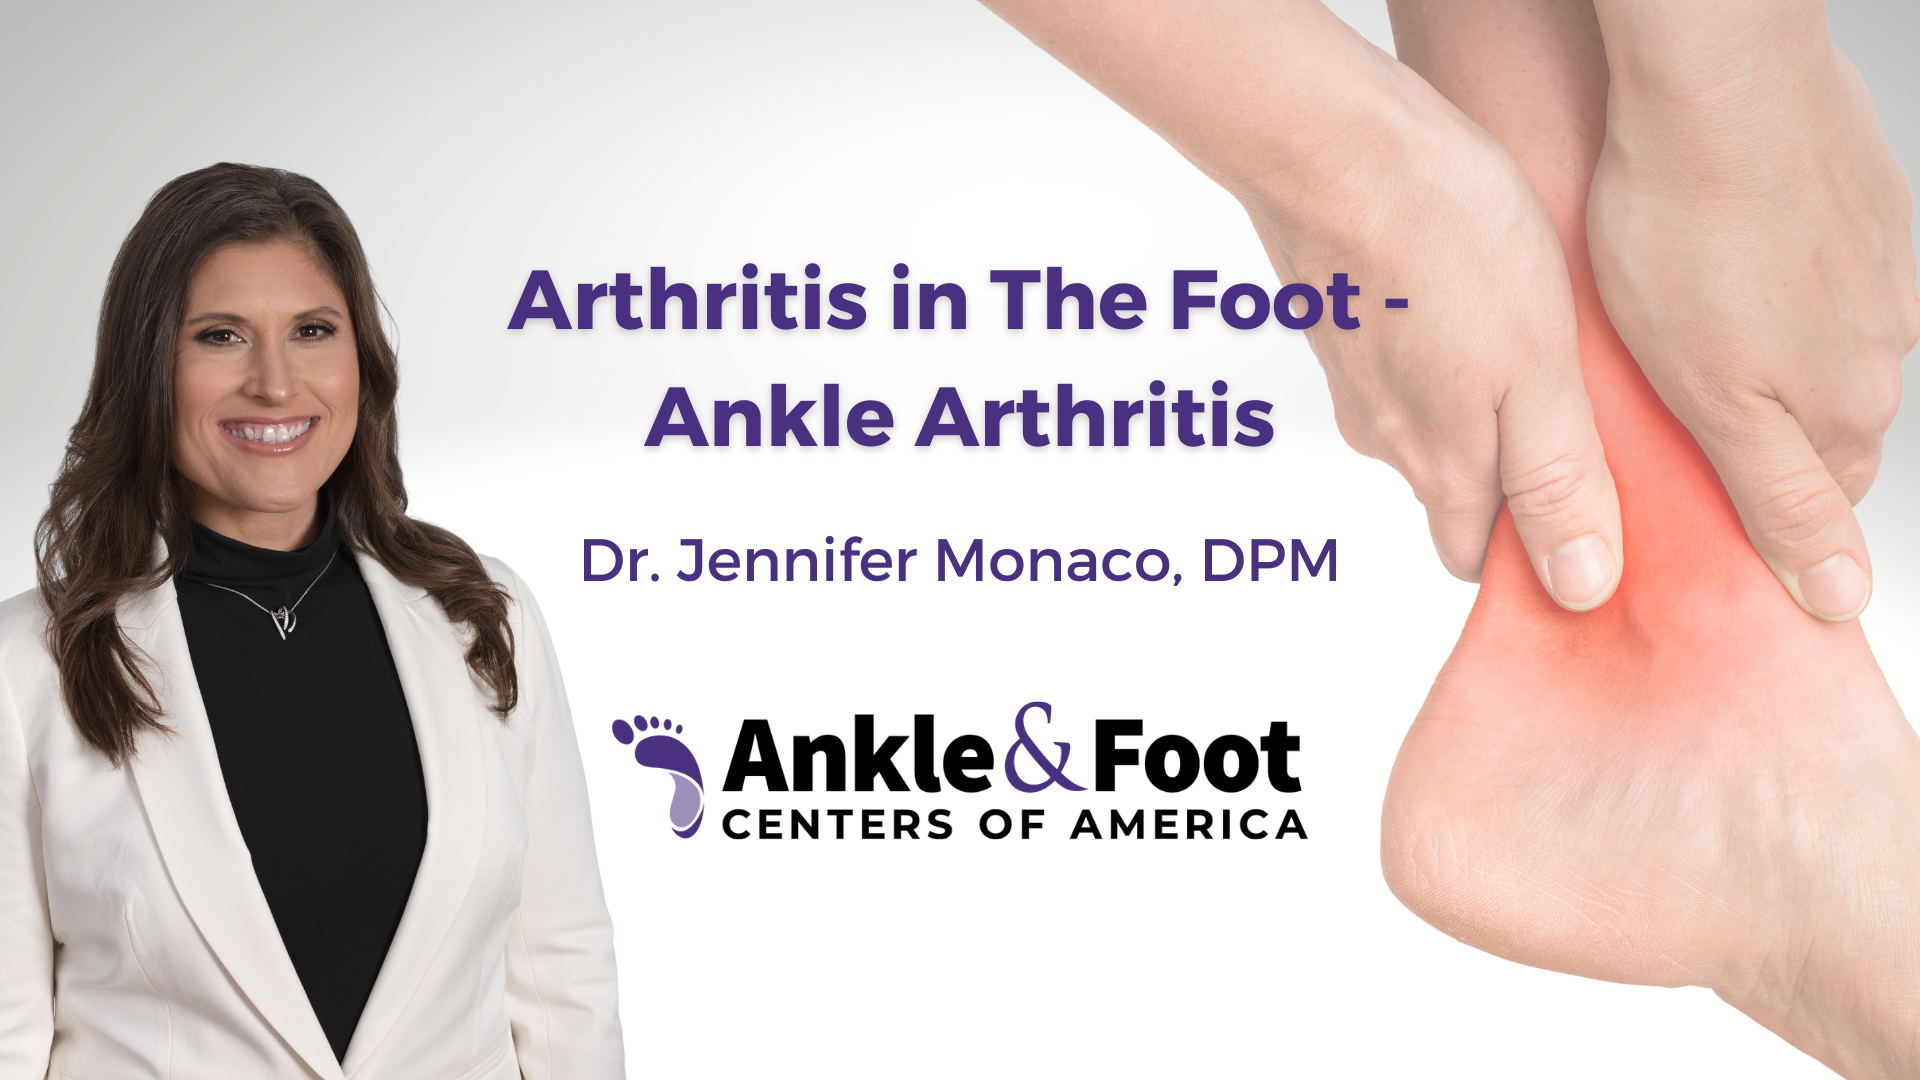 Pain Management for Ankle Arthritis